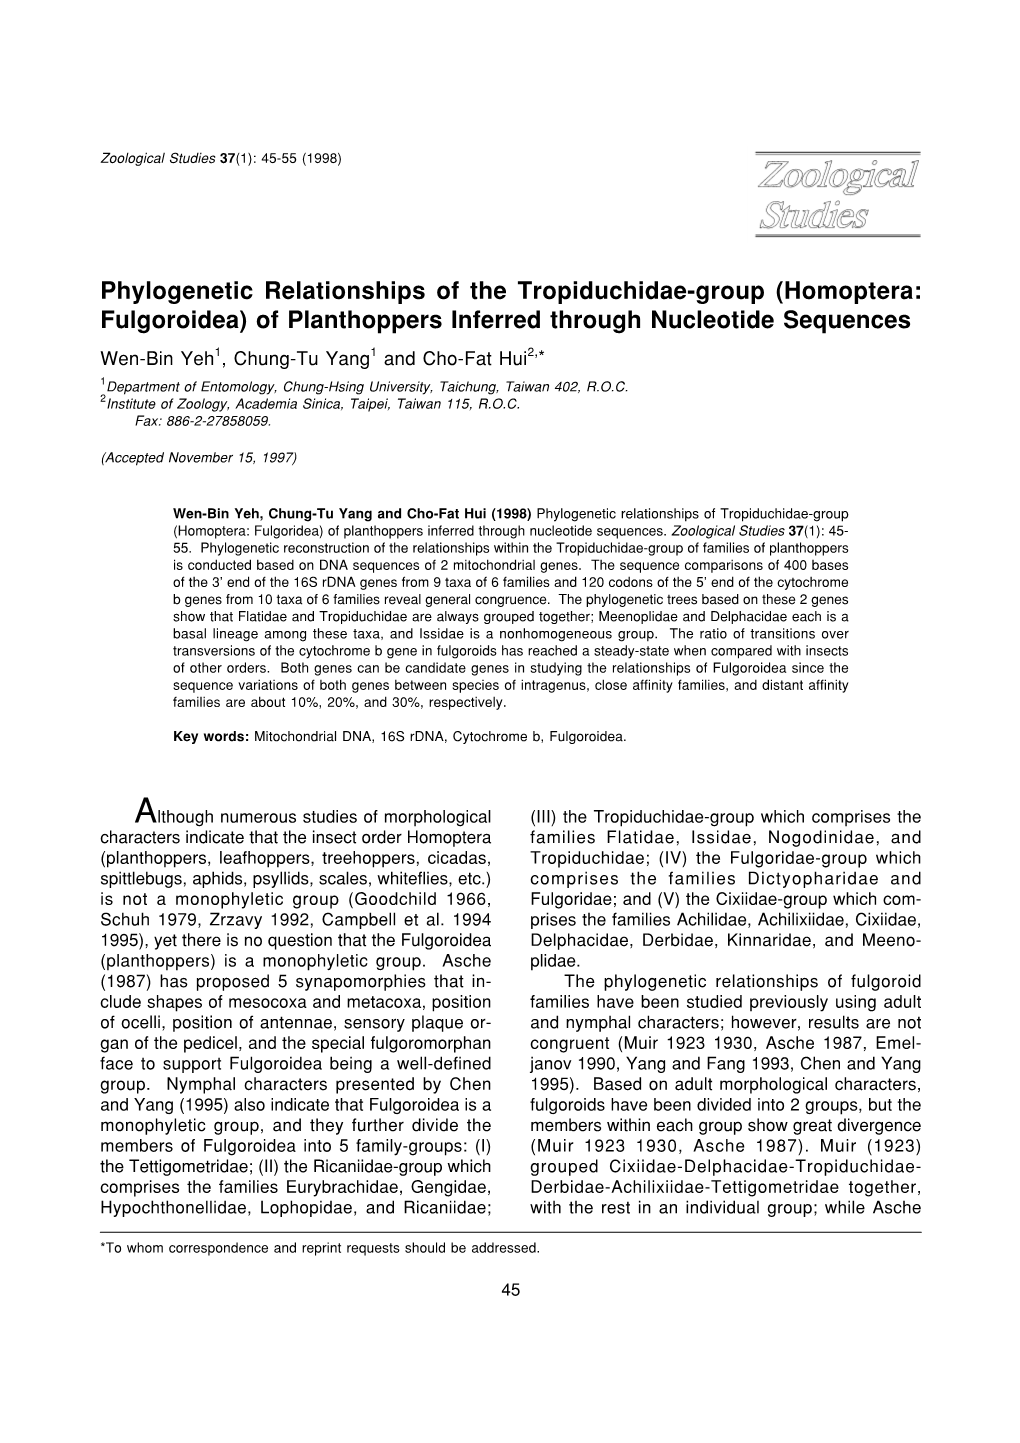 Phylogenetic Relationships of the Tropiduchidae-Group